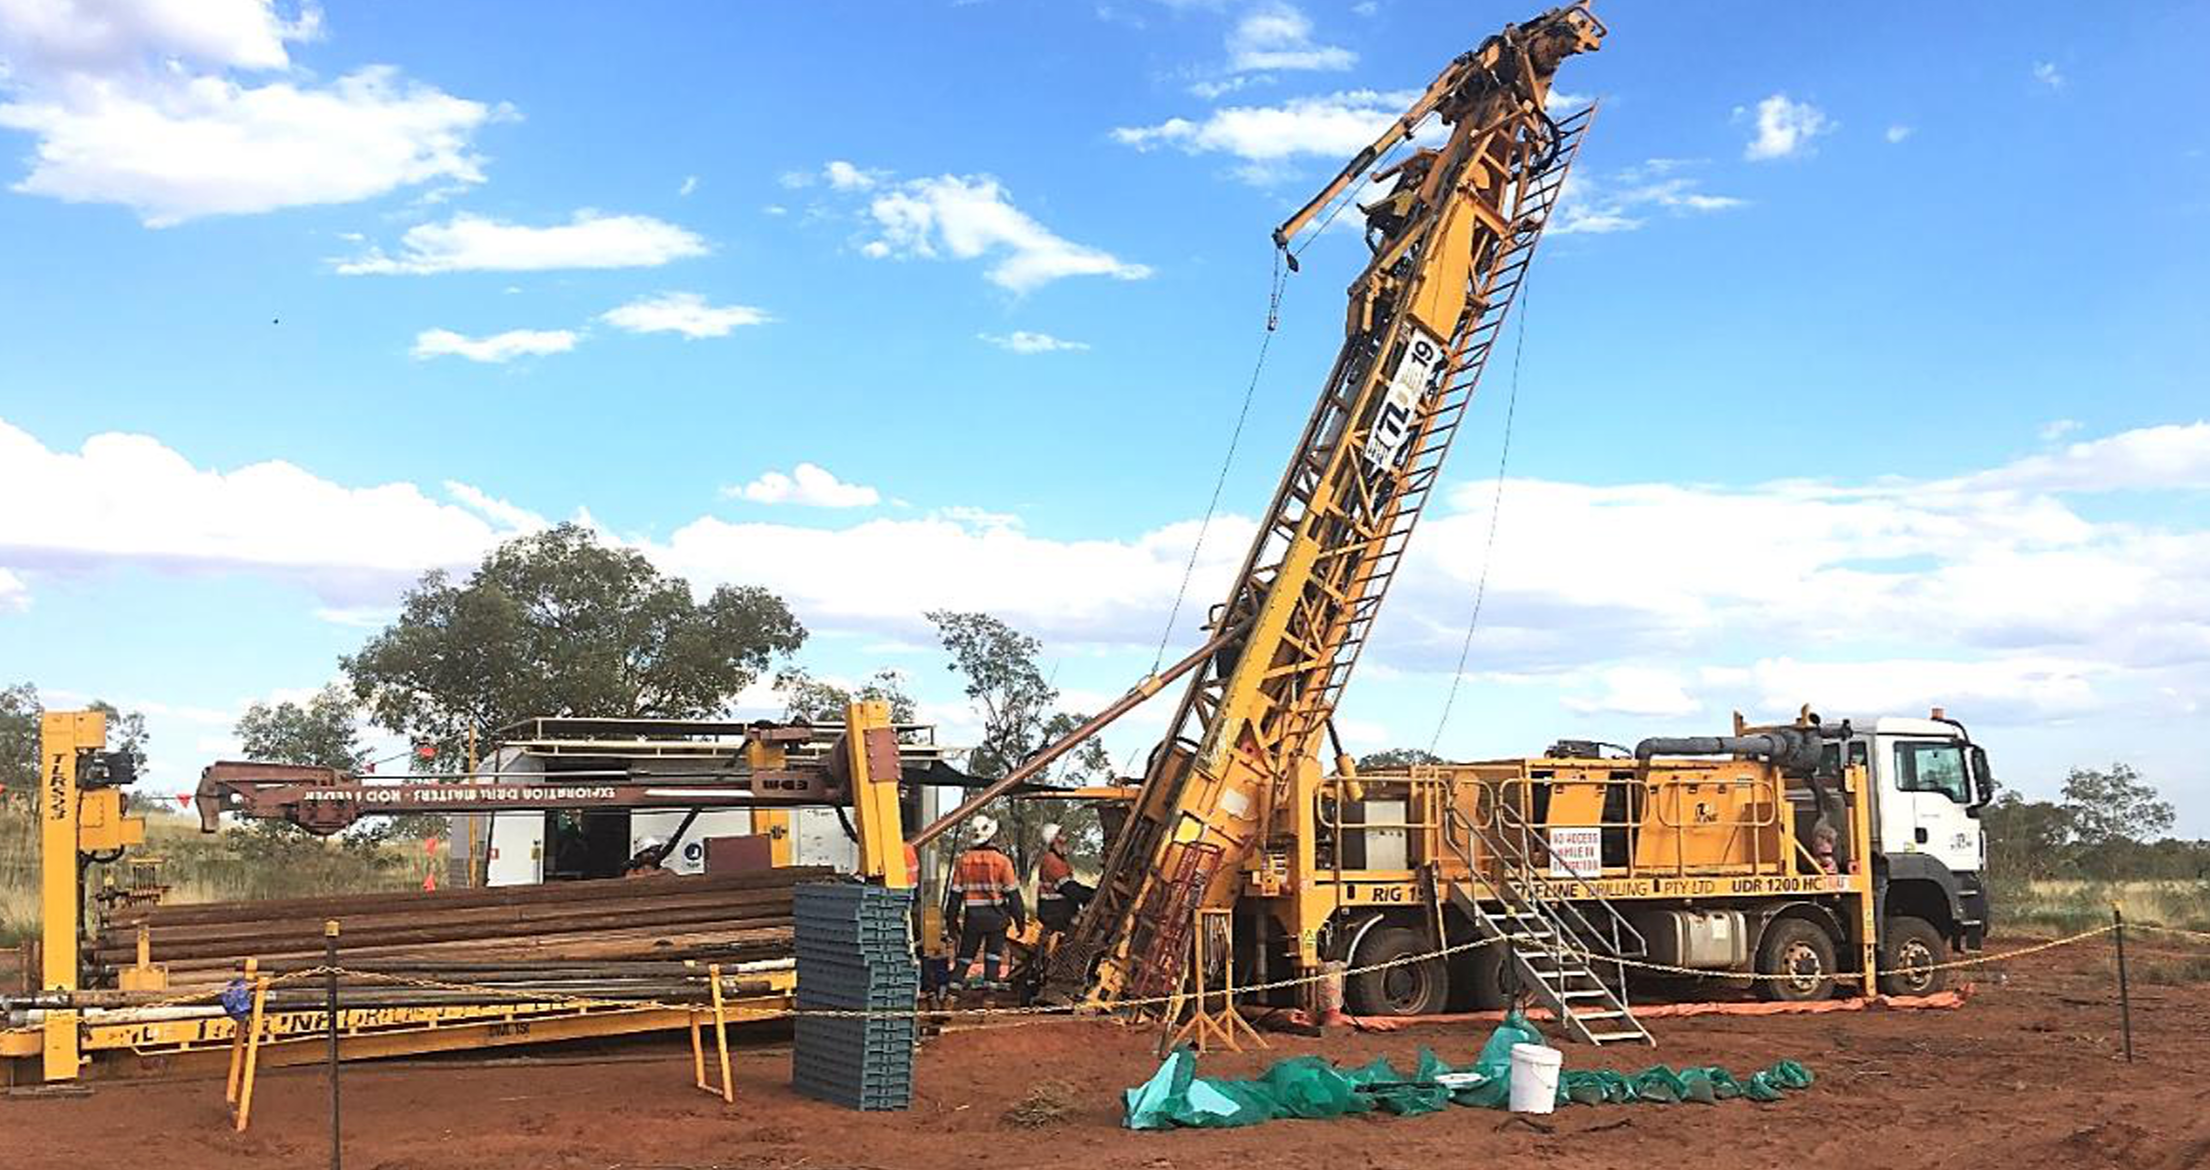  Titeline Drilling diamonddrilling rig on site at the Bluebird Prospect, December 2021